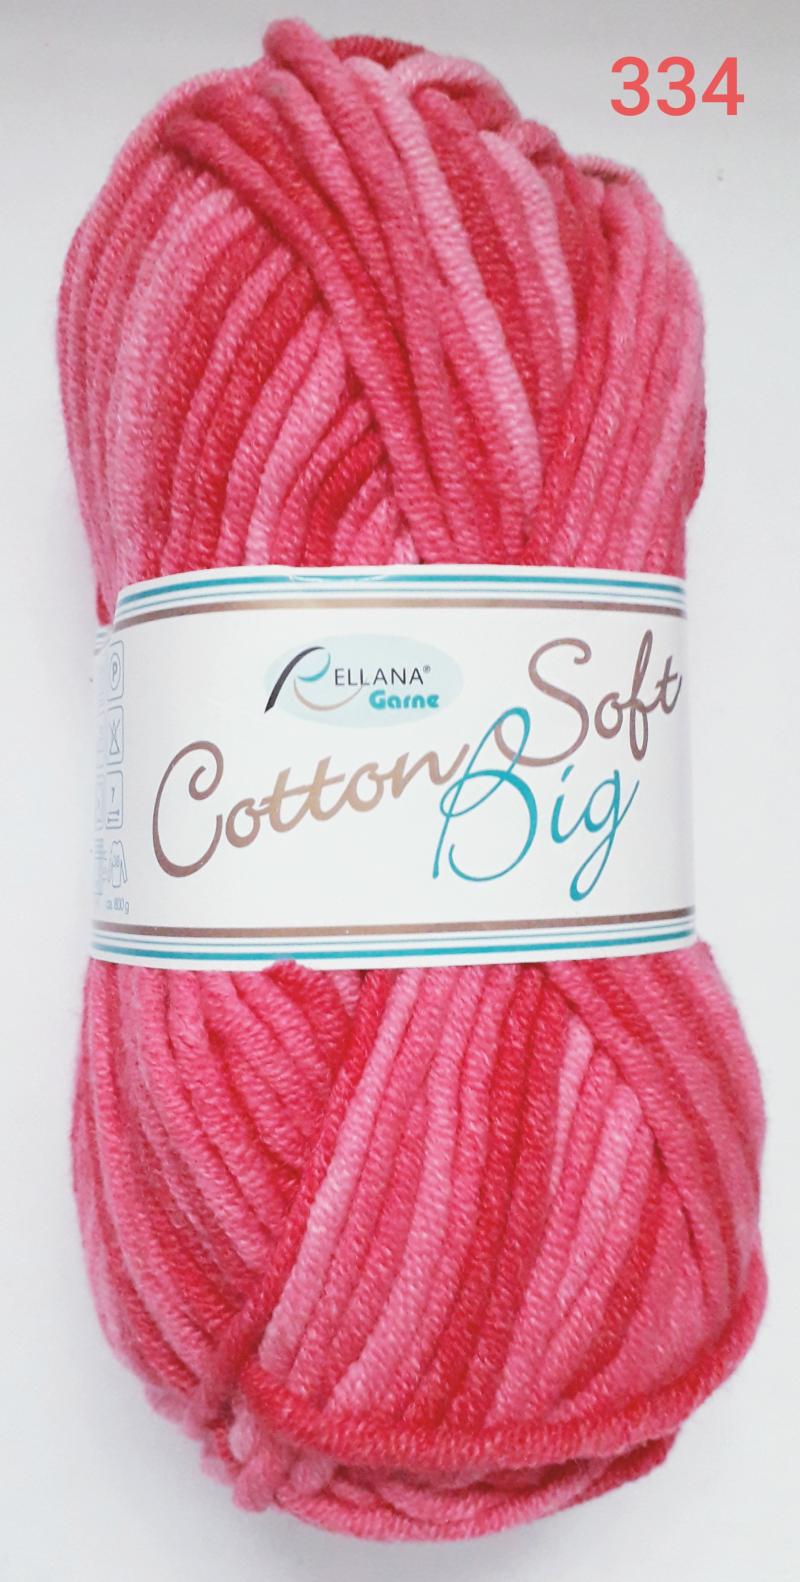 Cotton Soft Big